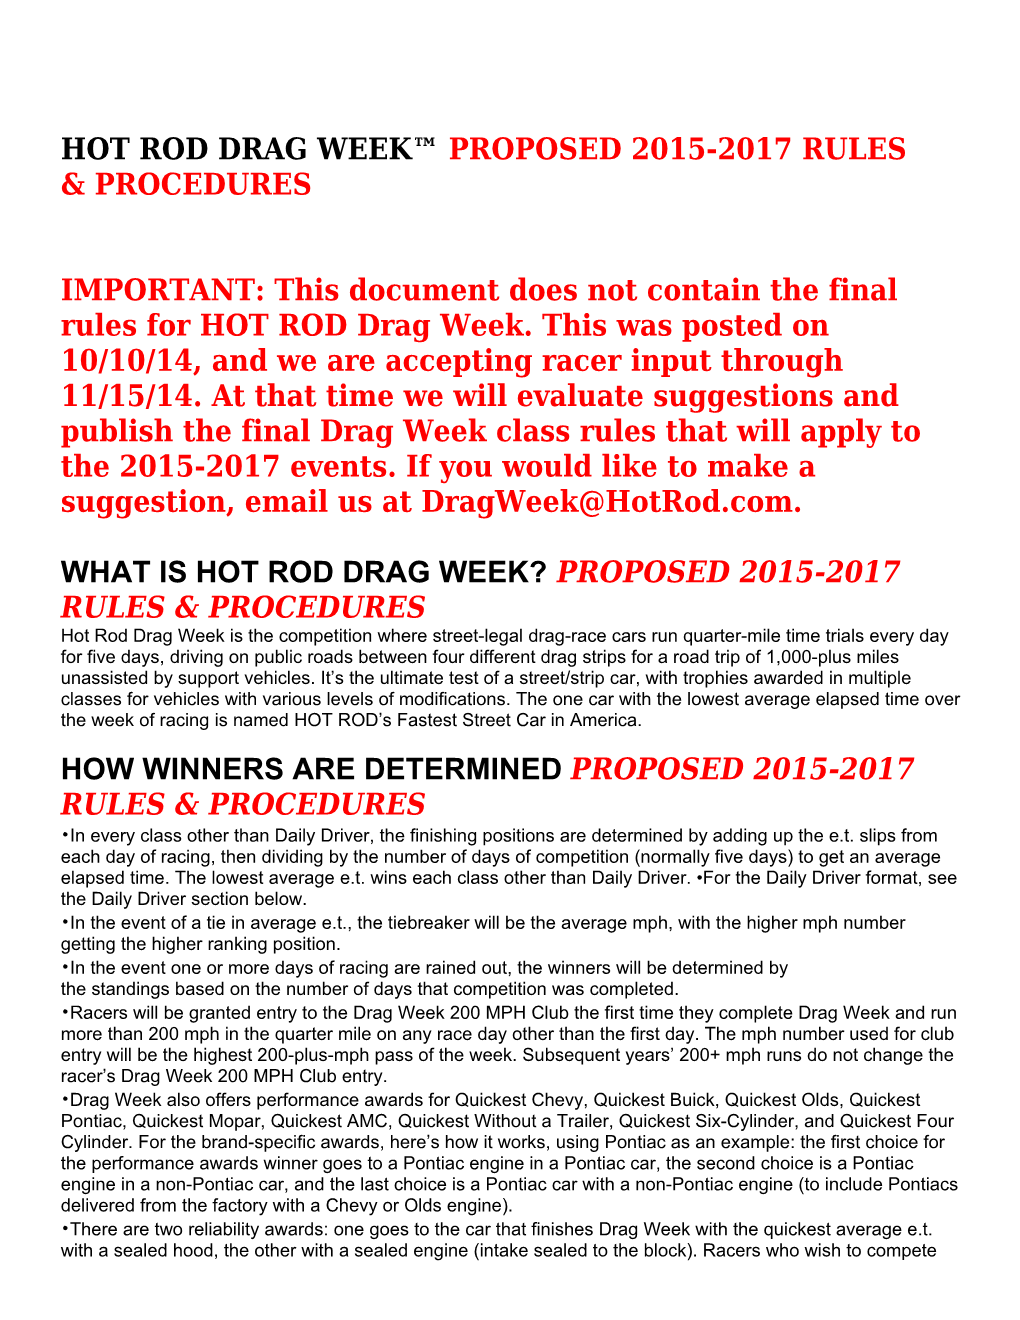 Hot Rod Drag Week Proposed 2015-2017 Rules & Procedures